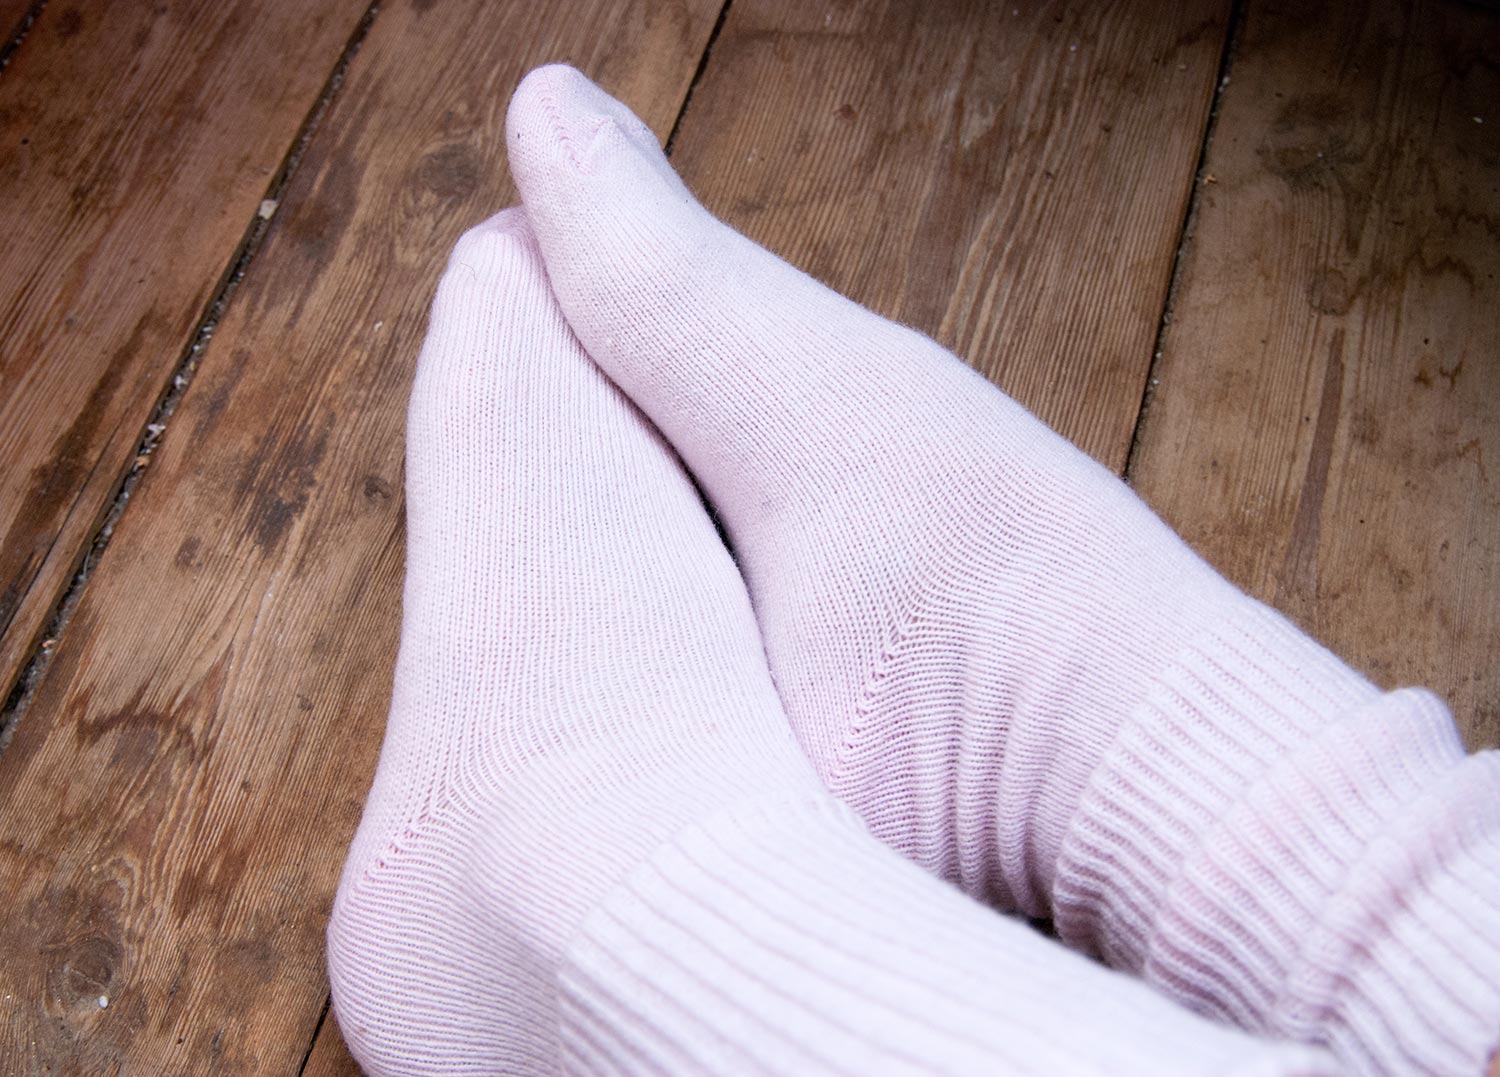 Тёплые носки MiNiMi. Изображение ©bracatuS.com